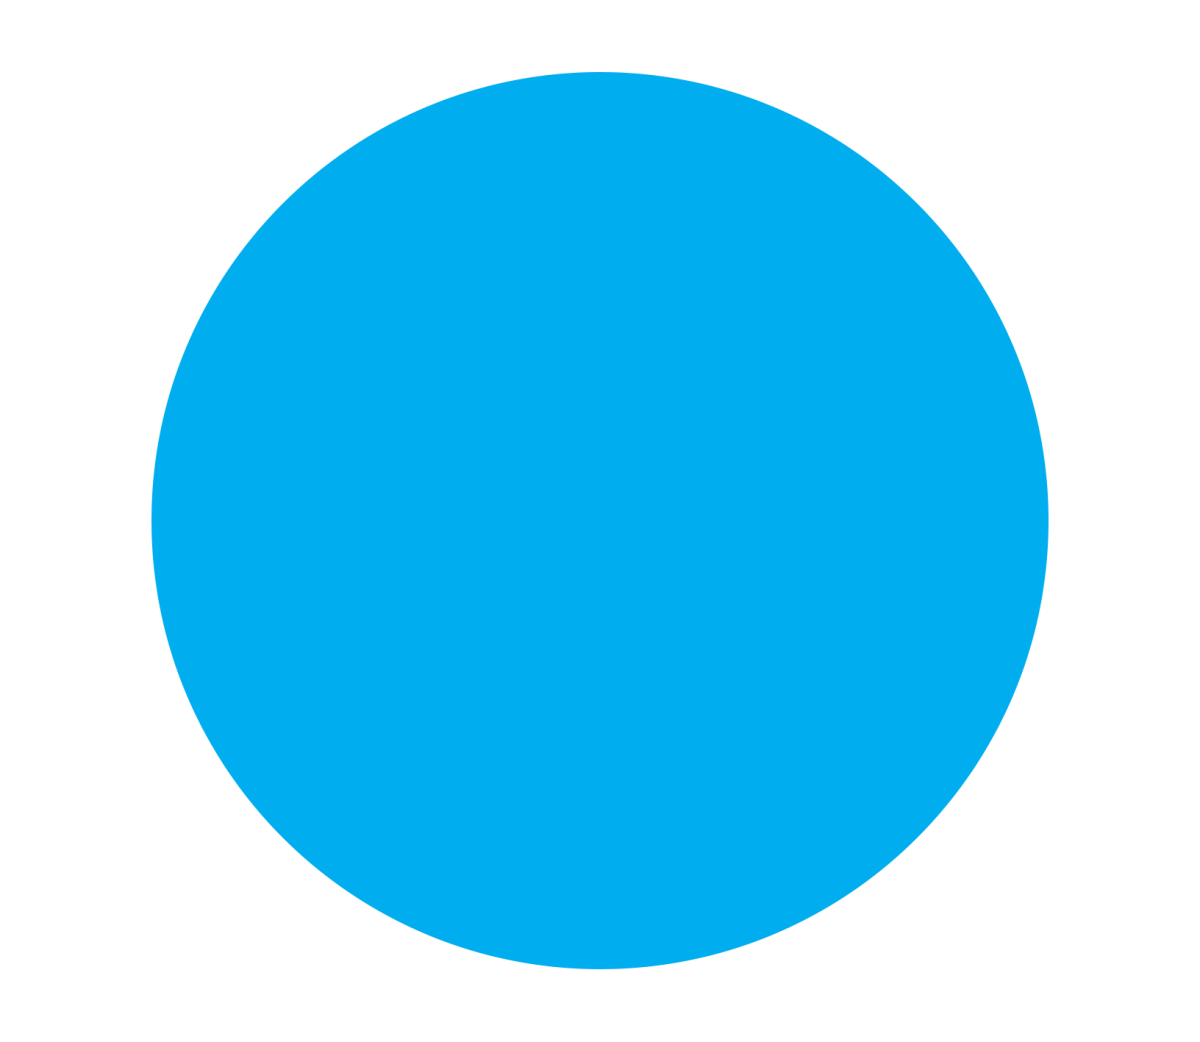 Круг картинка. Синий круг. Синие кружочки. Круг синего цвета. Кружочки синего цвета.